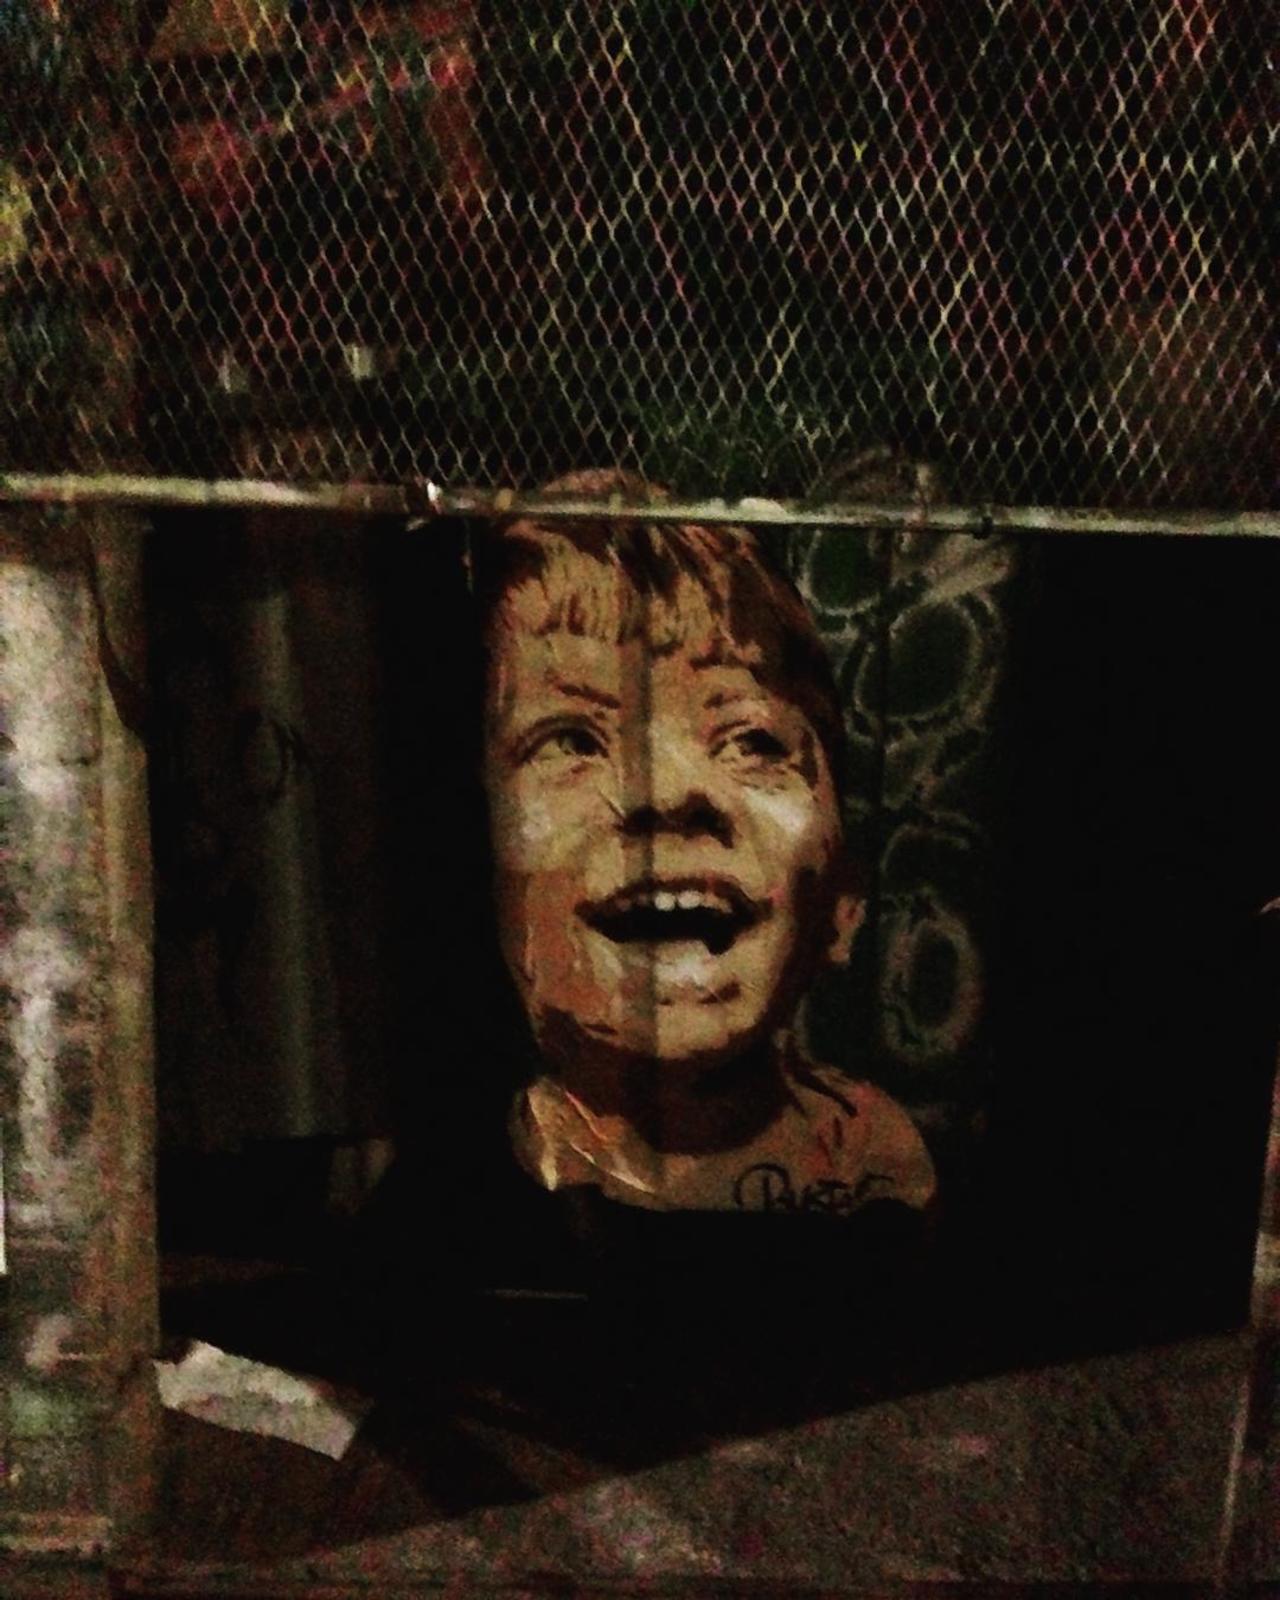 #Paris #graffiti photo by @streetrorart http://ift.tt/1OYURCc #StreetArt https://t.co/JI2cOrjsyK